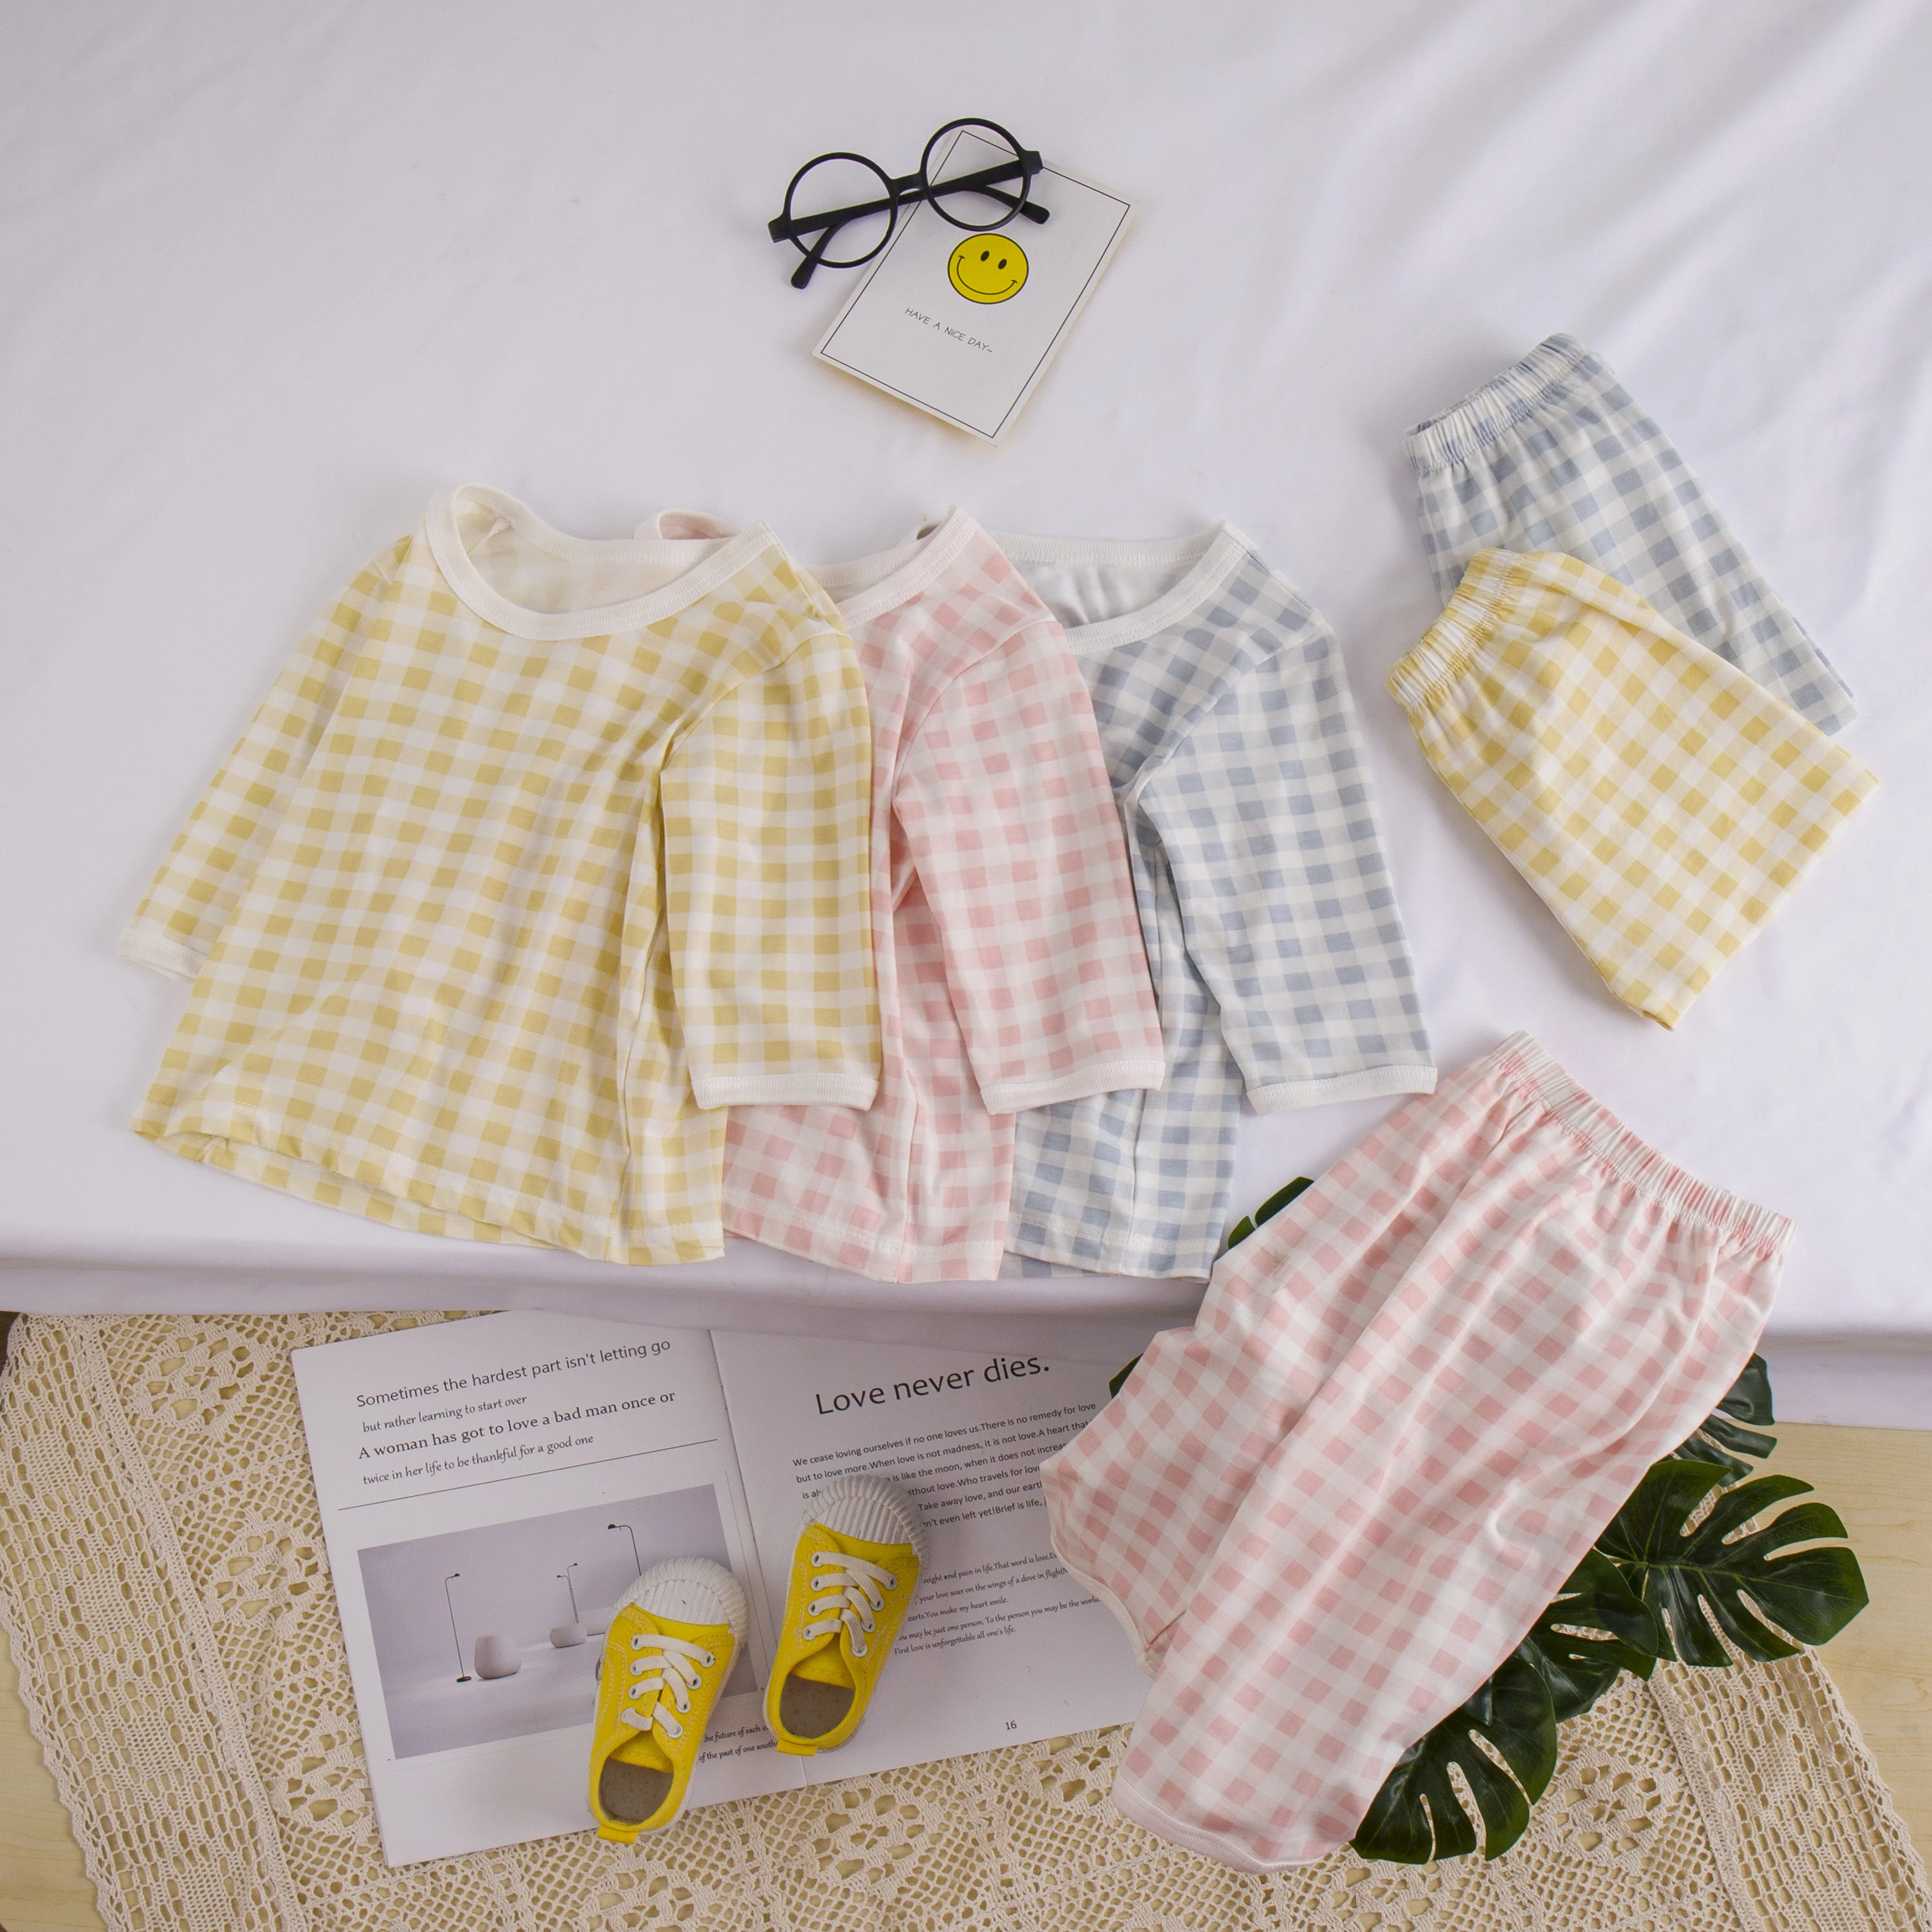 

Susuray Girls Short Sleeve Pajamas Toddler Cotton 2 Piece Pjs Kids Sleepwear Clothes Sets for Summer 1-5T